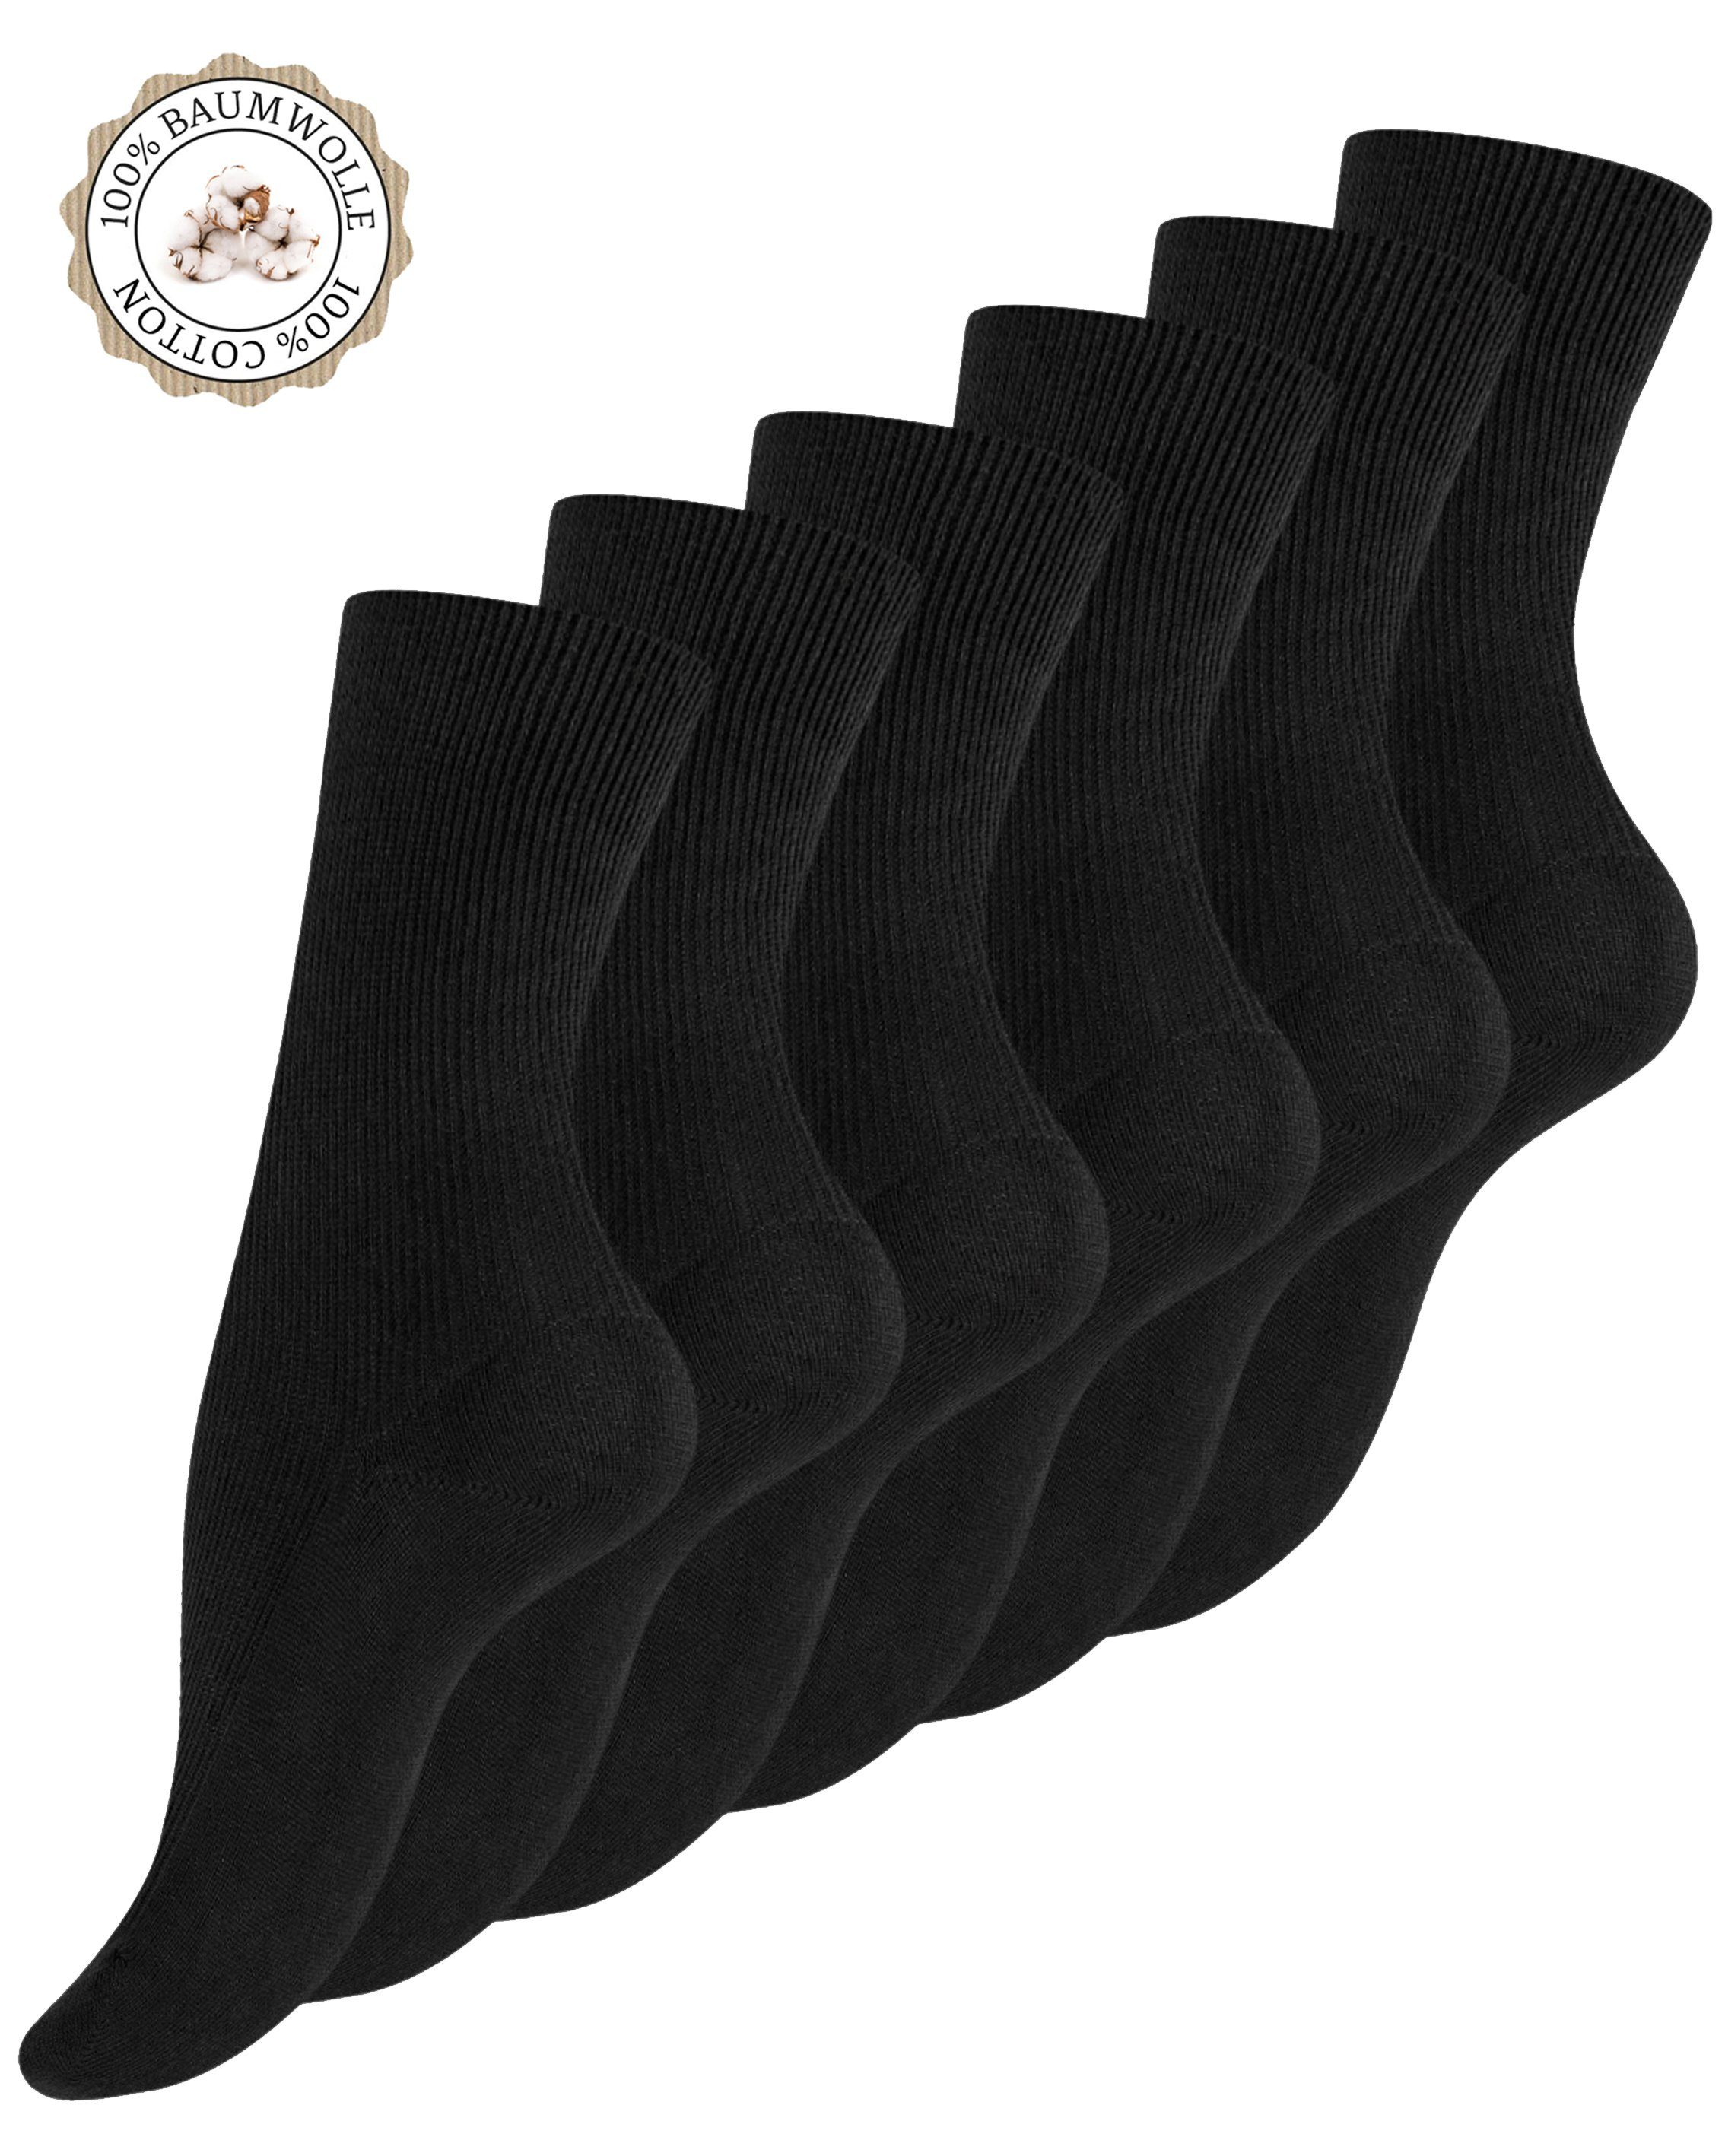 Zehennaht Socken schwarz Handgekettelte (6-Paar) Yenita®